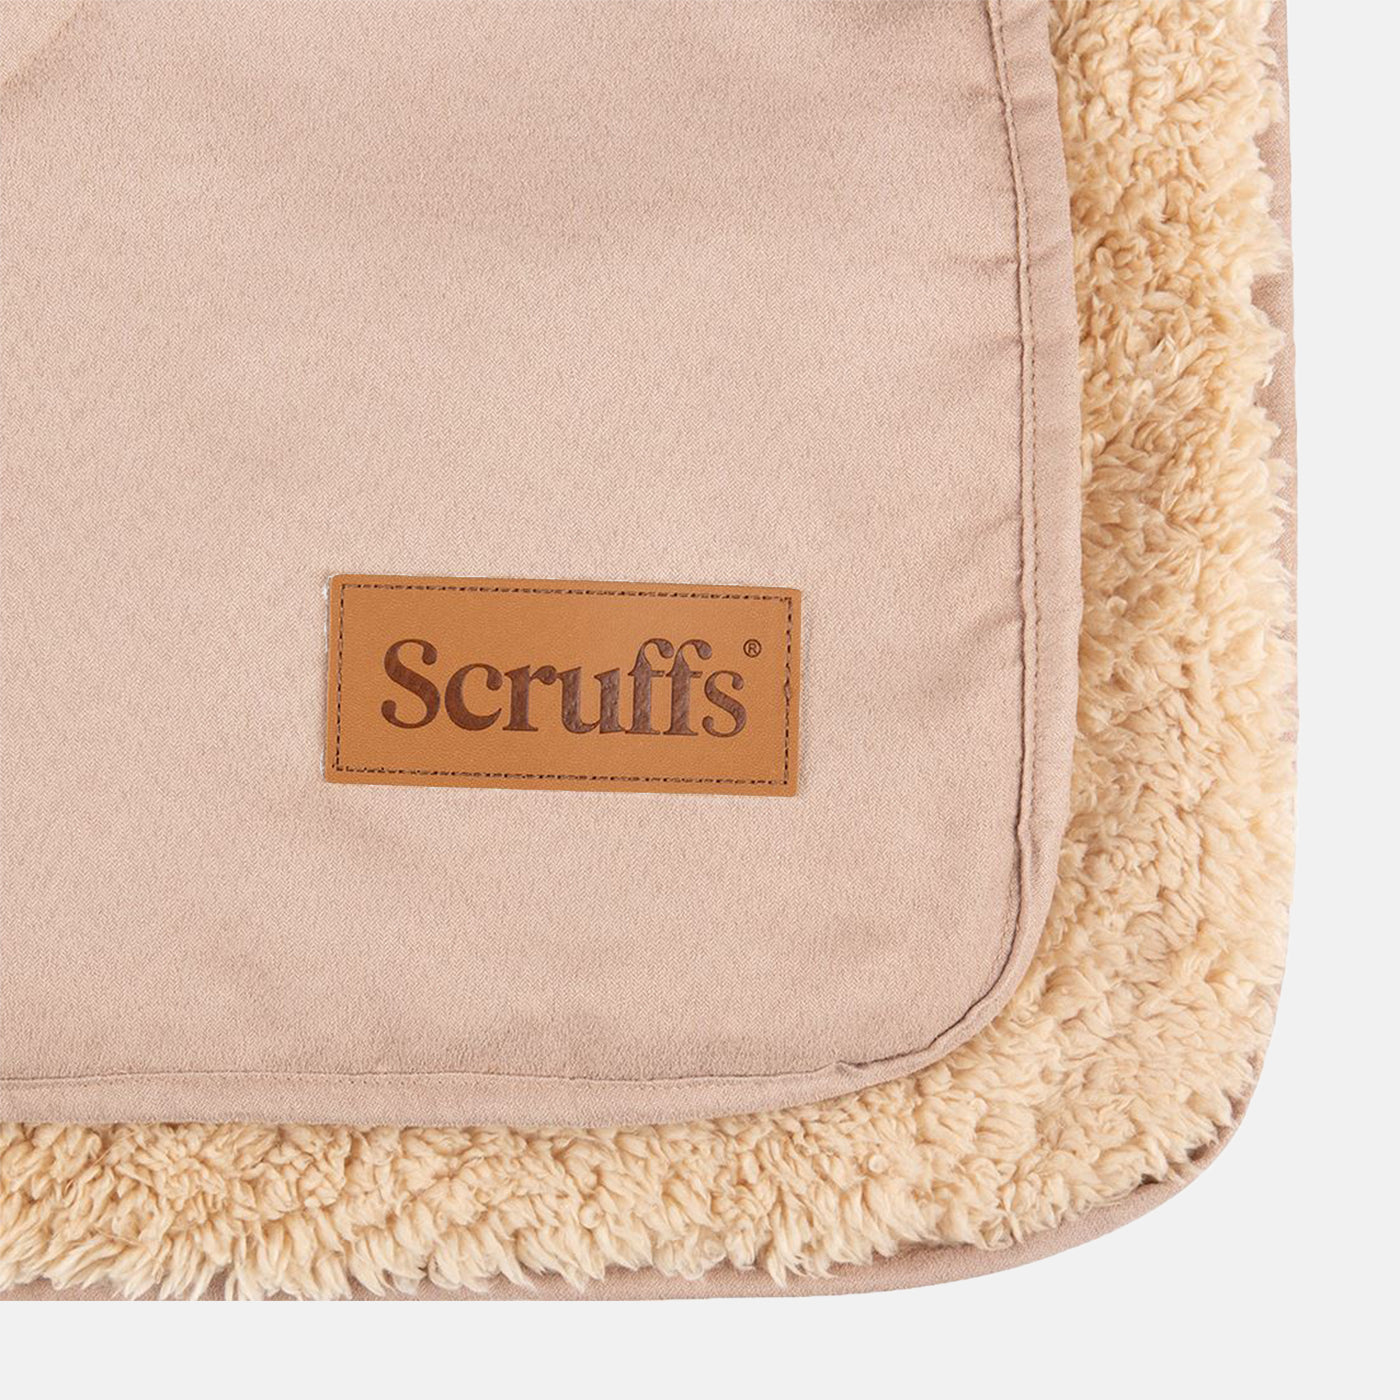 Scruffs Snuggle Blanket - Desert Sand